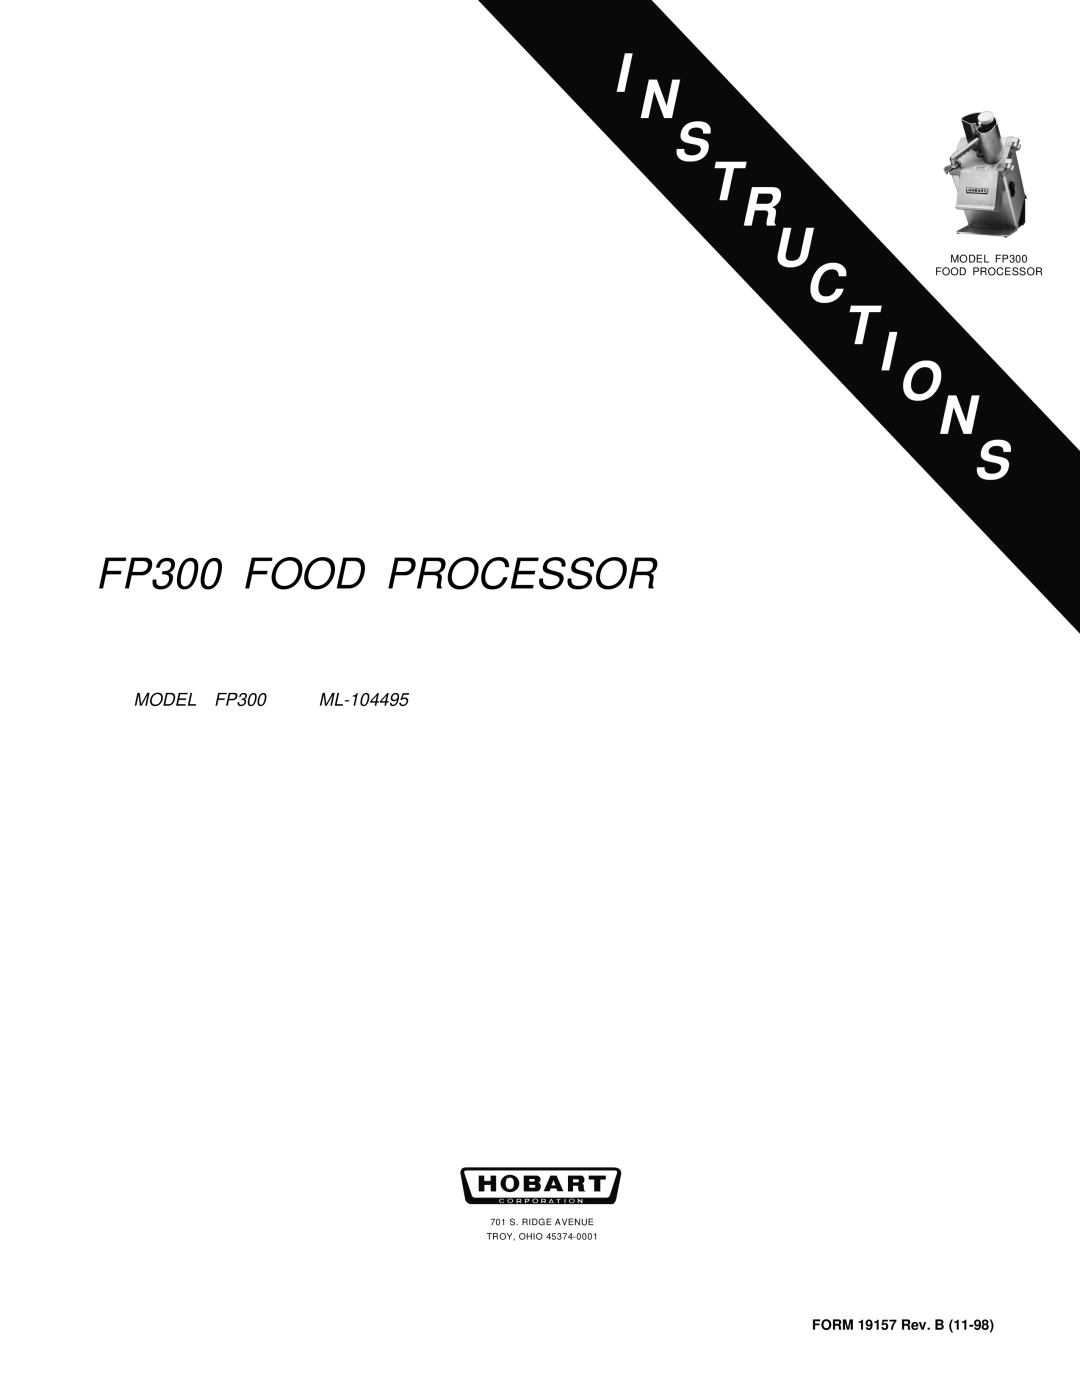 Hobart manual I N S Tr, FP300 FOOD, MODEL FP300, ML-104495, FORM 19157 Rev. B, Food Processor 